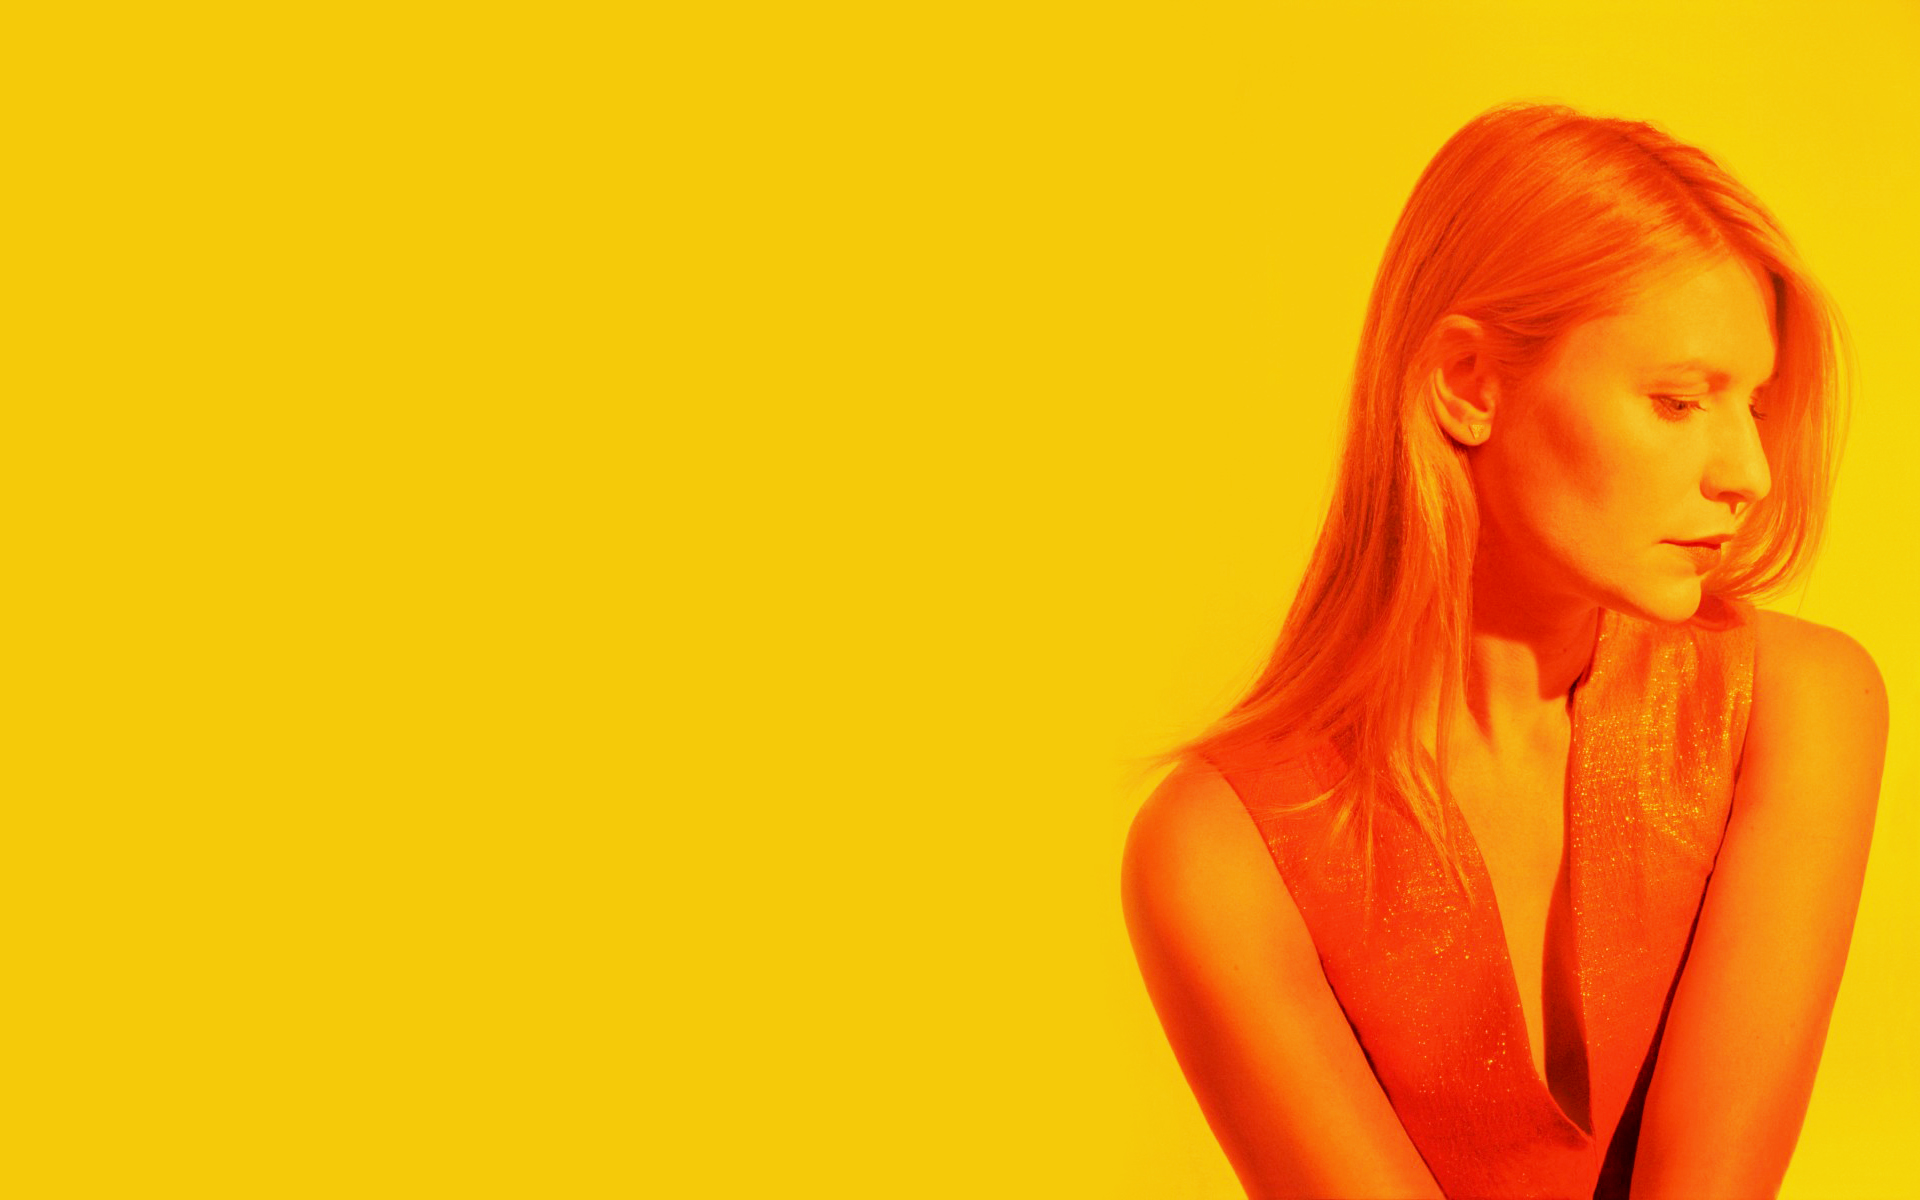 Claire Danes Actress Blonde Celebrity Women Yellow Background Portrait Face Long Hair Yellow 1920x1200